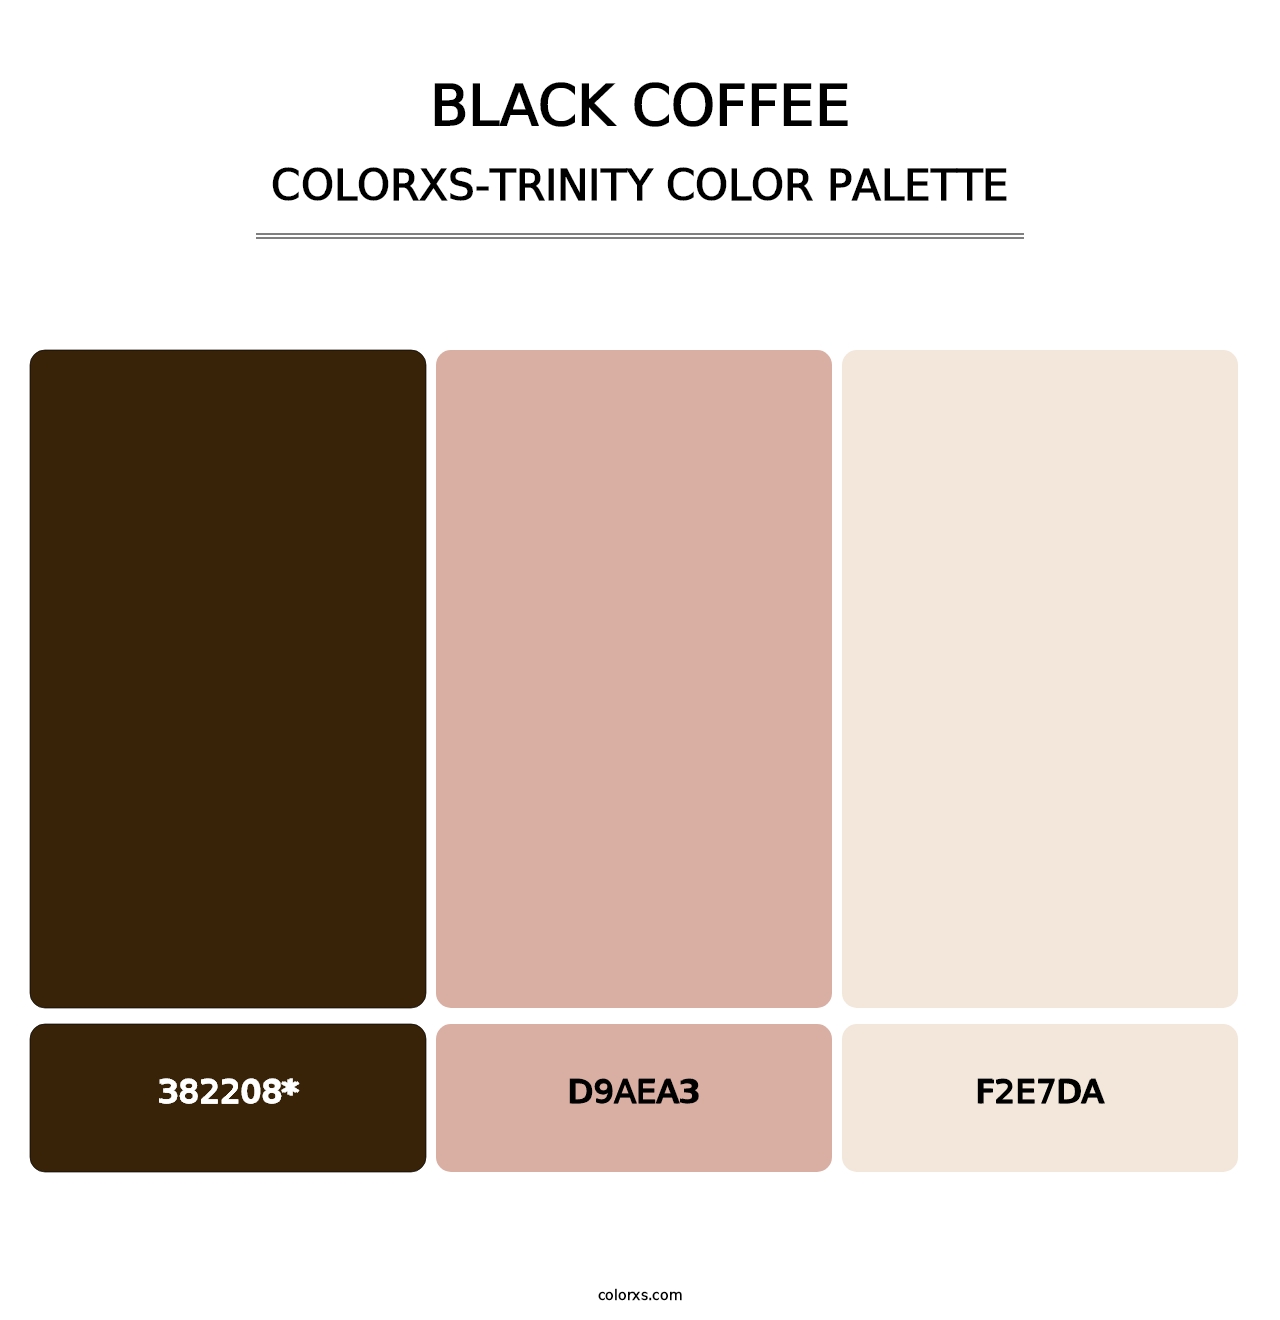 Black Coffee - Colorxs Trinity Palette